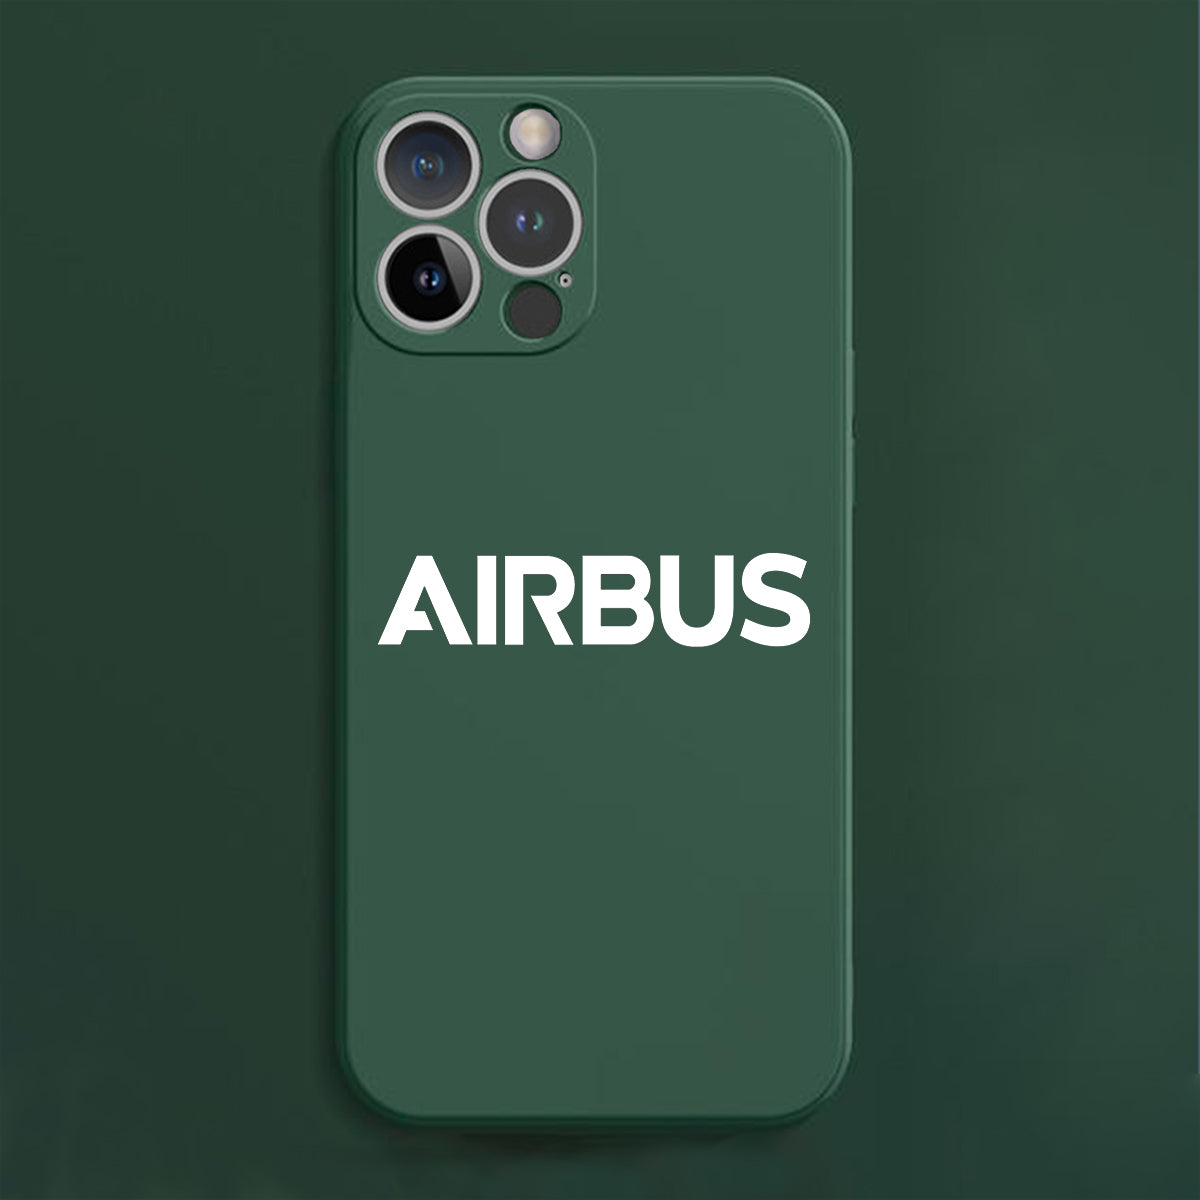 Airbus & Text Designed Soft Silicone iPhone Cases